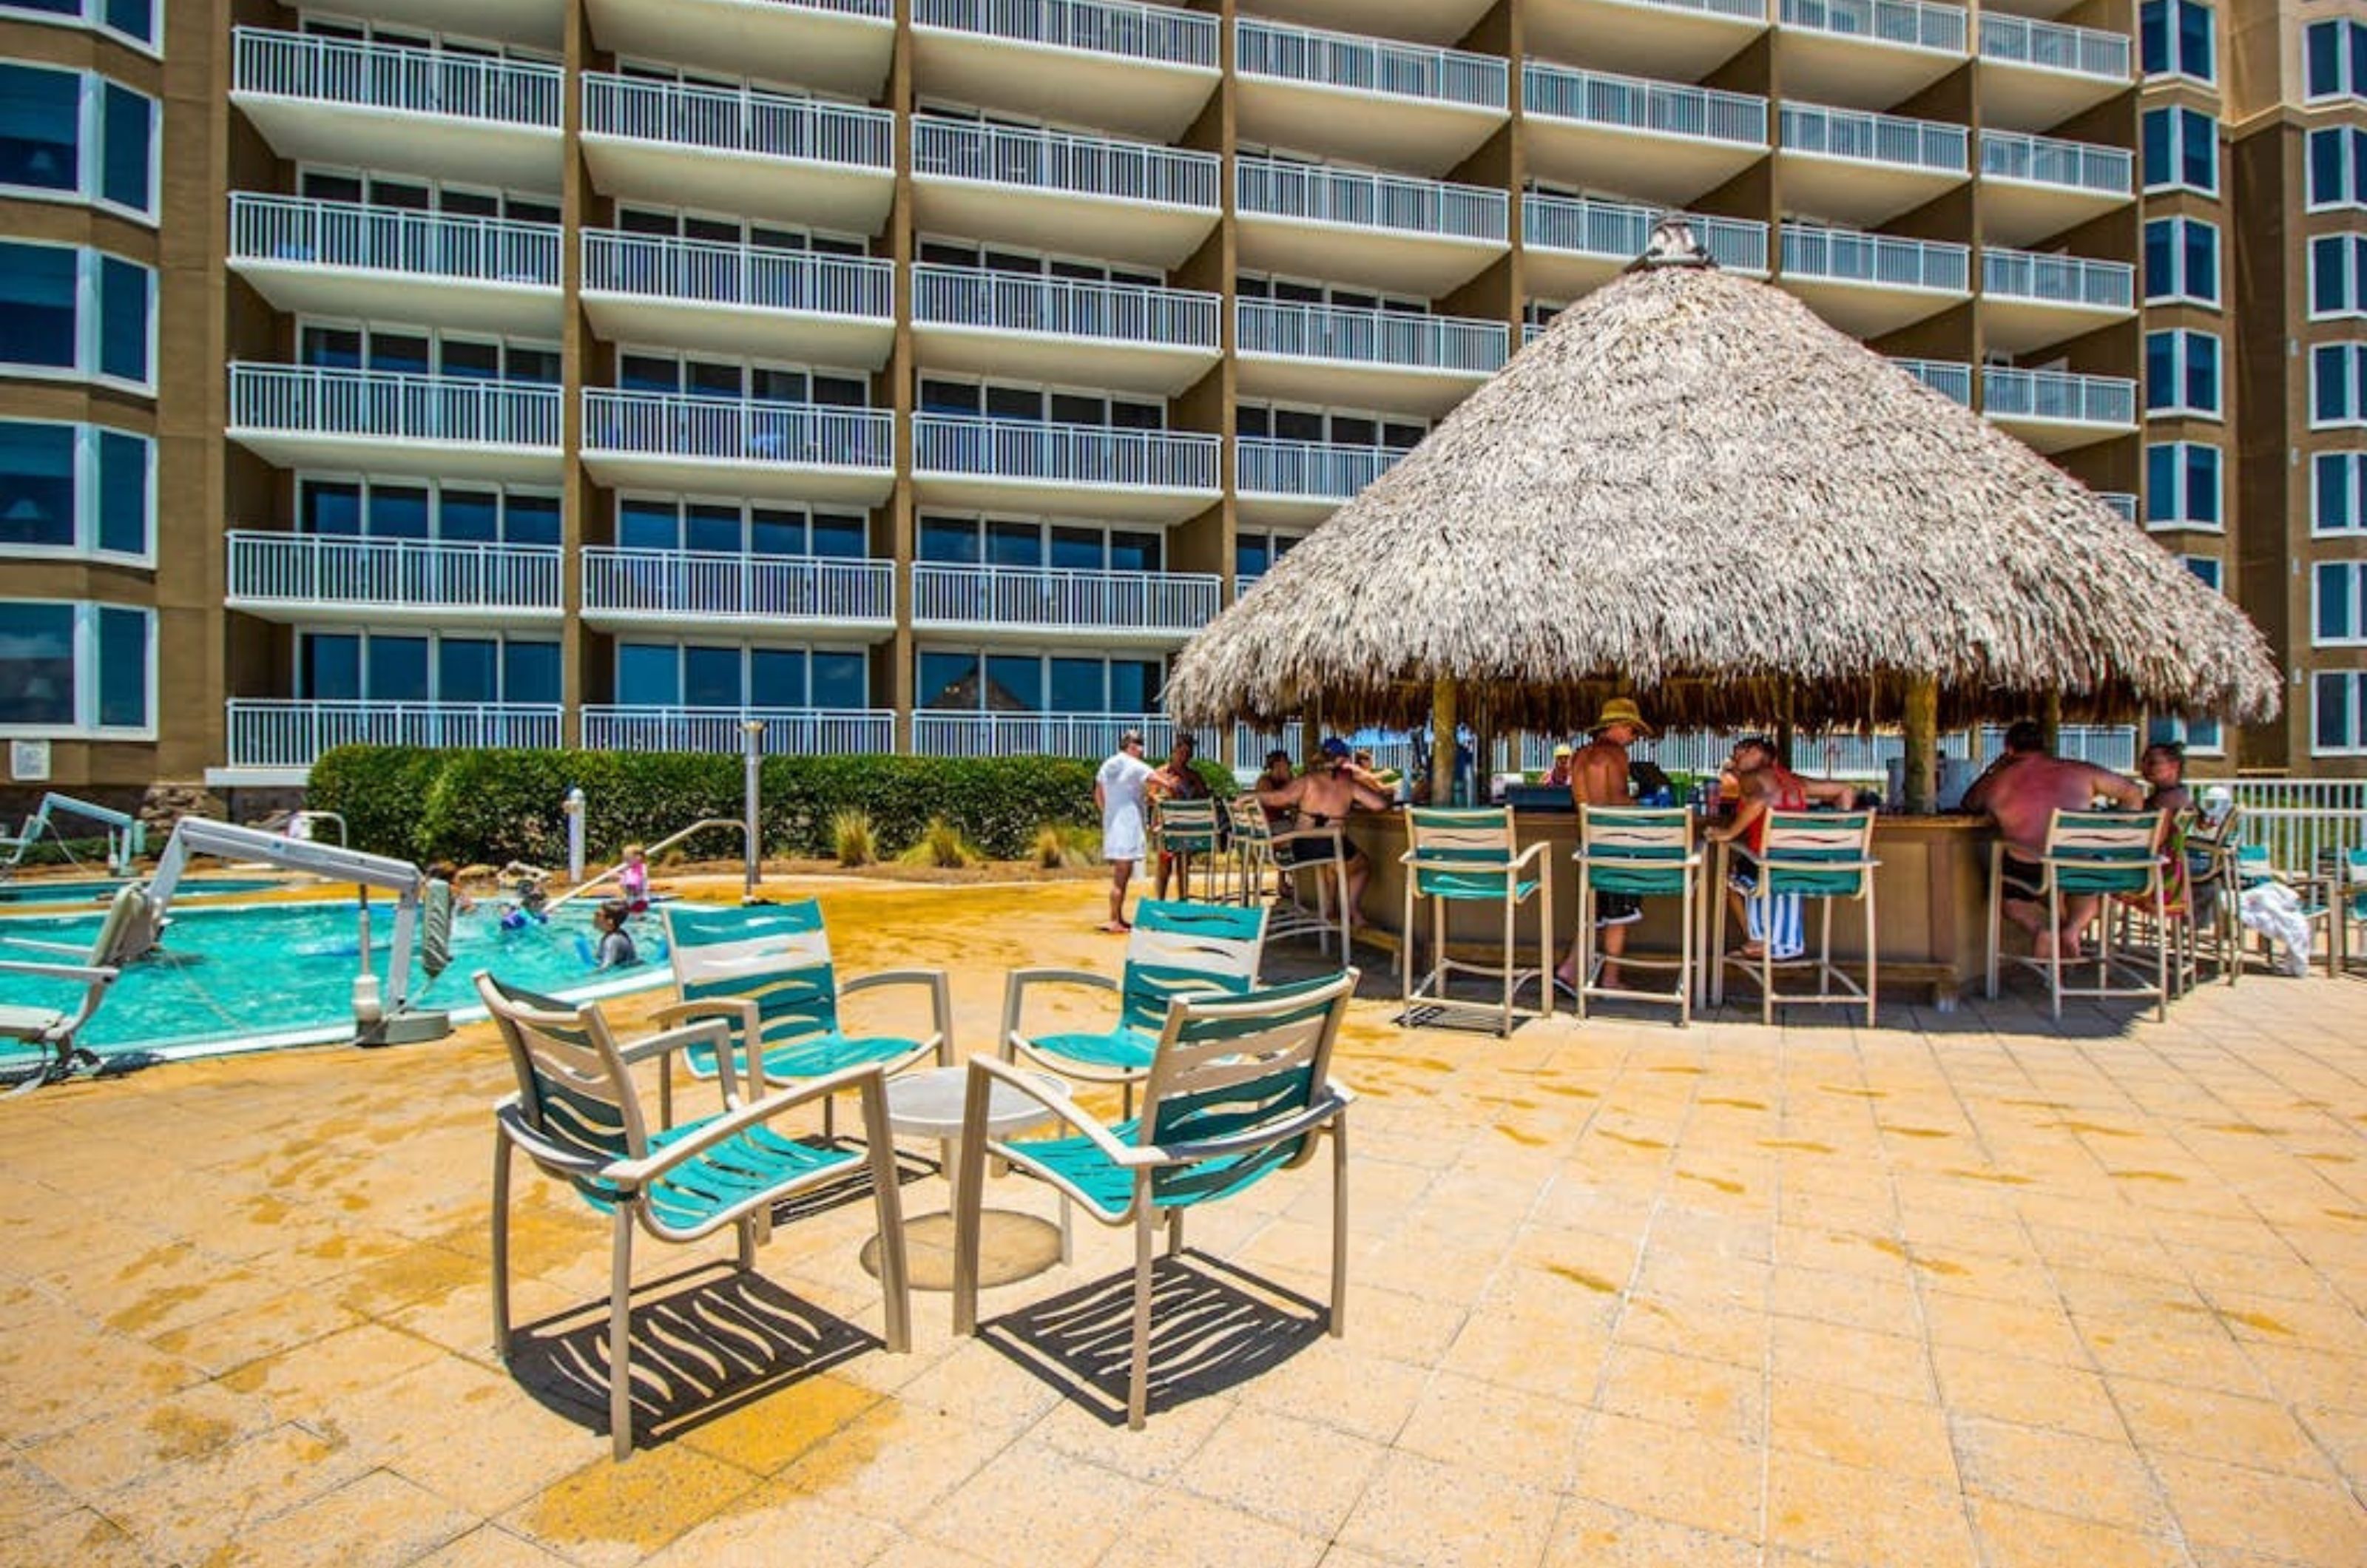 The poolside bar at Emerald Beach Resort in Panama City Beach Florida 